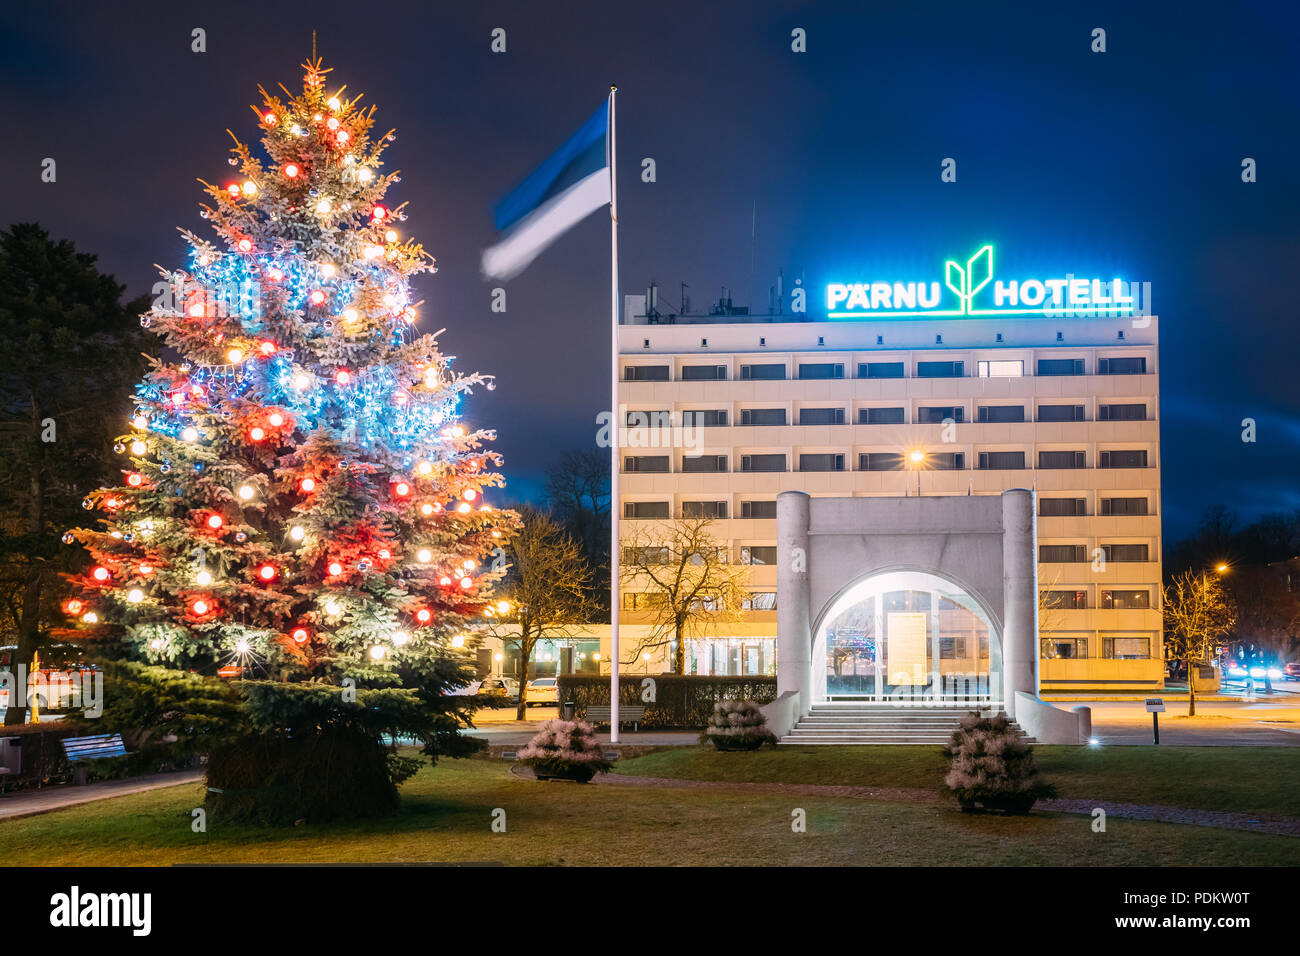 Parnu, Estonia - December 14, 2017: Parnu Hotel And Christmas Tree In Evening Christmas Xmas New Year Illuminations. Stock Photo